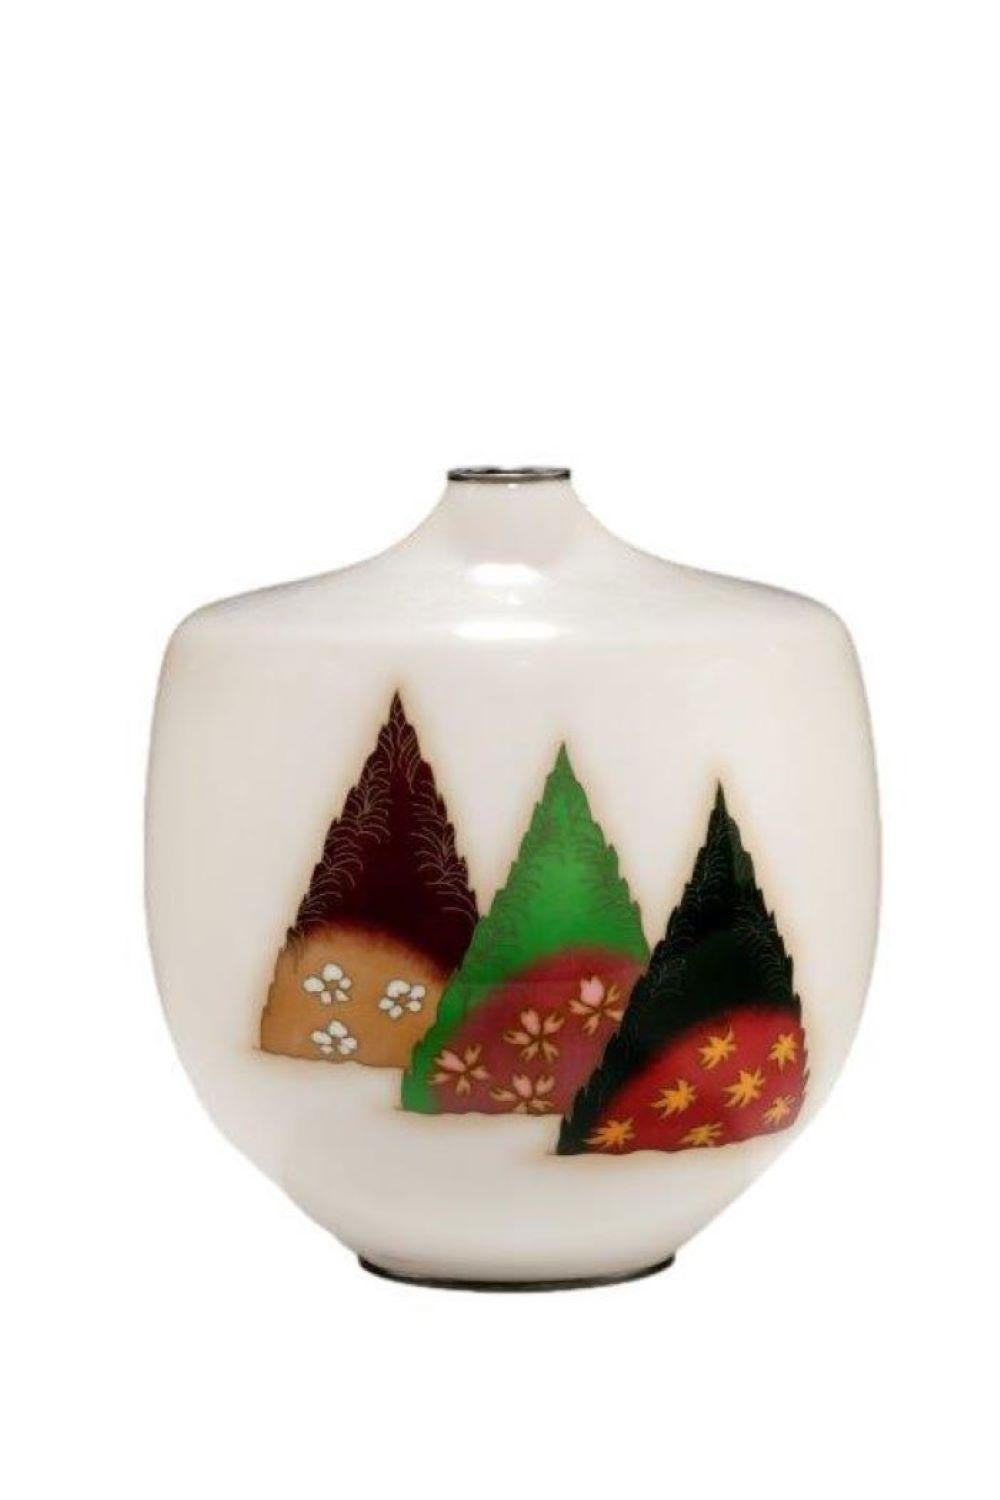 Japanese Unusual Taisho/Showa Period Cloisonné Enamel Vase by Ando Jubei For Sale